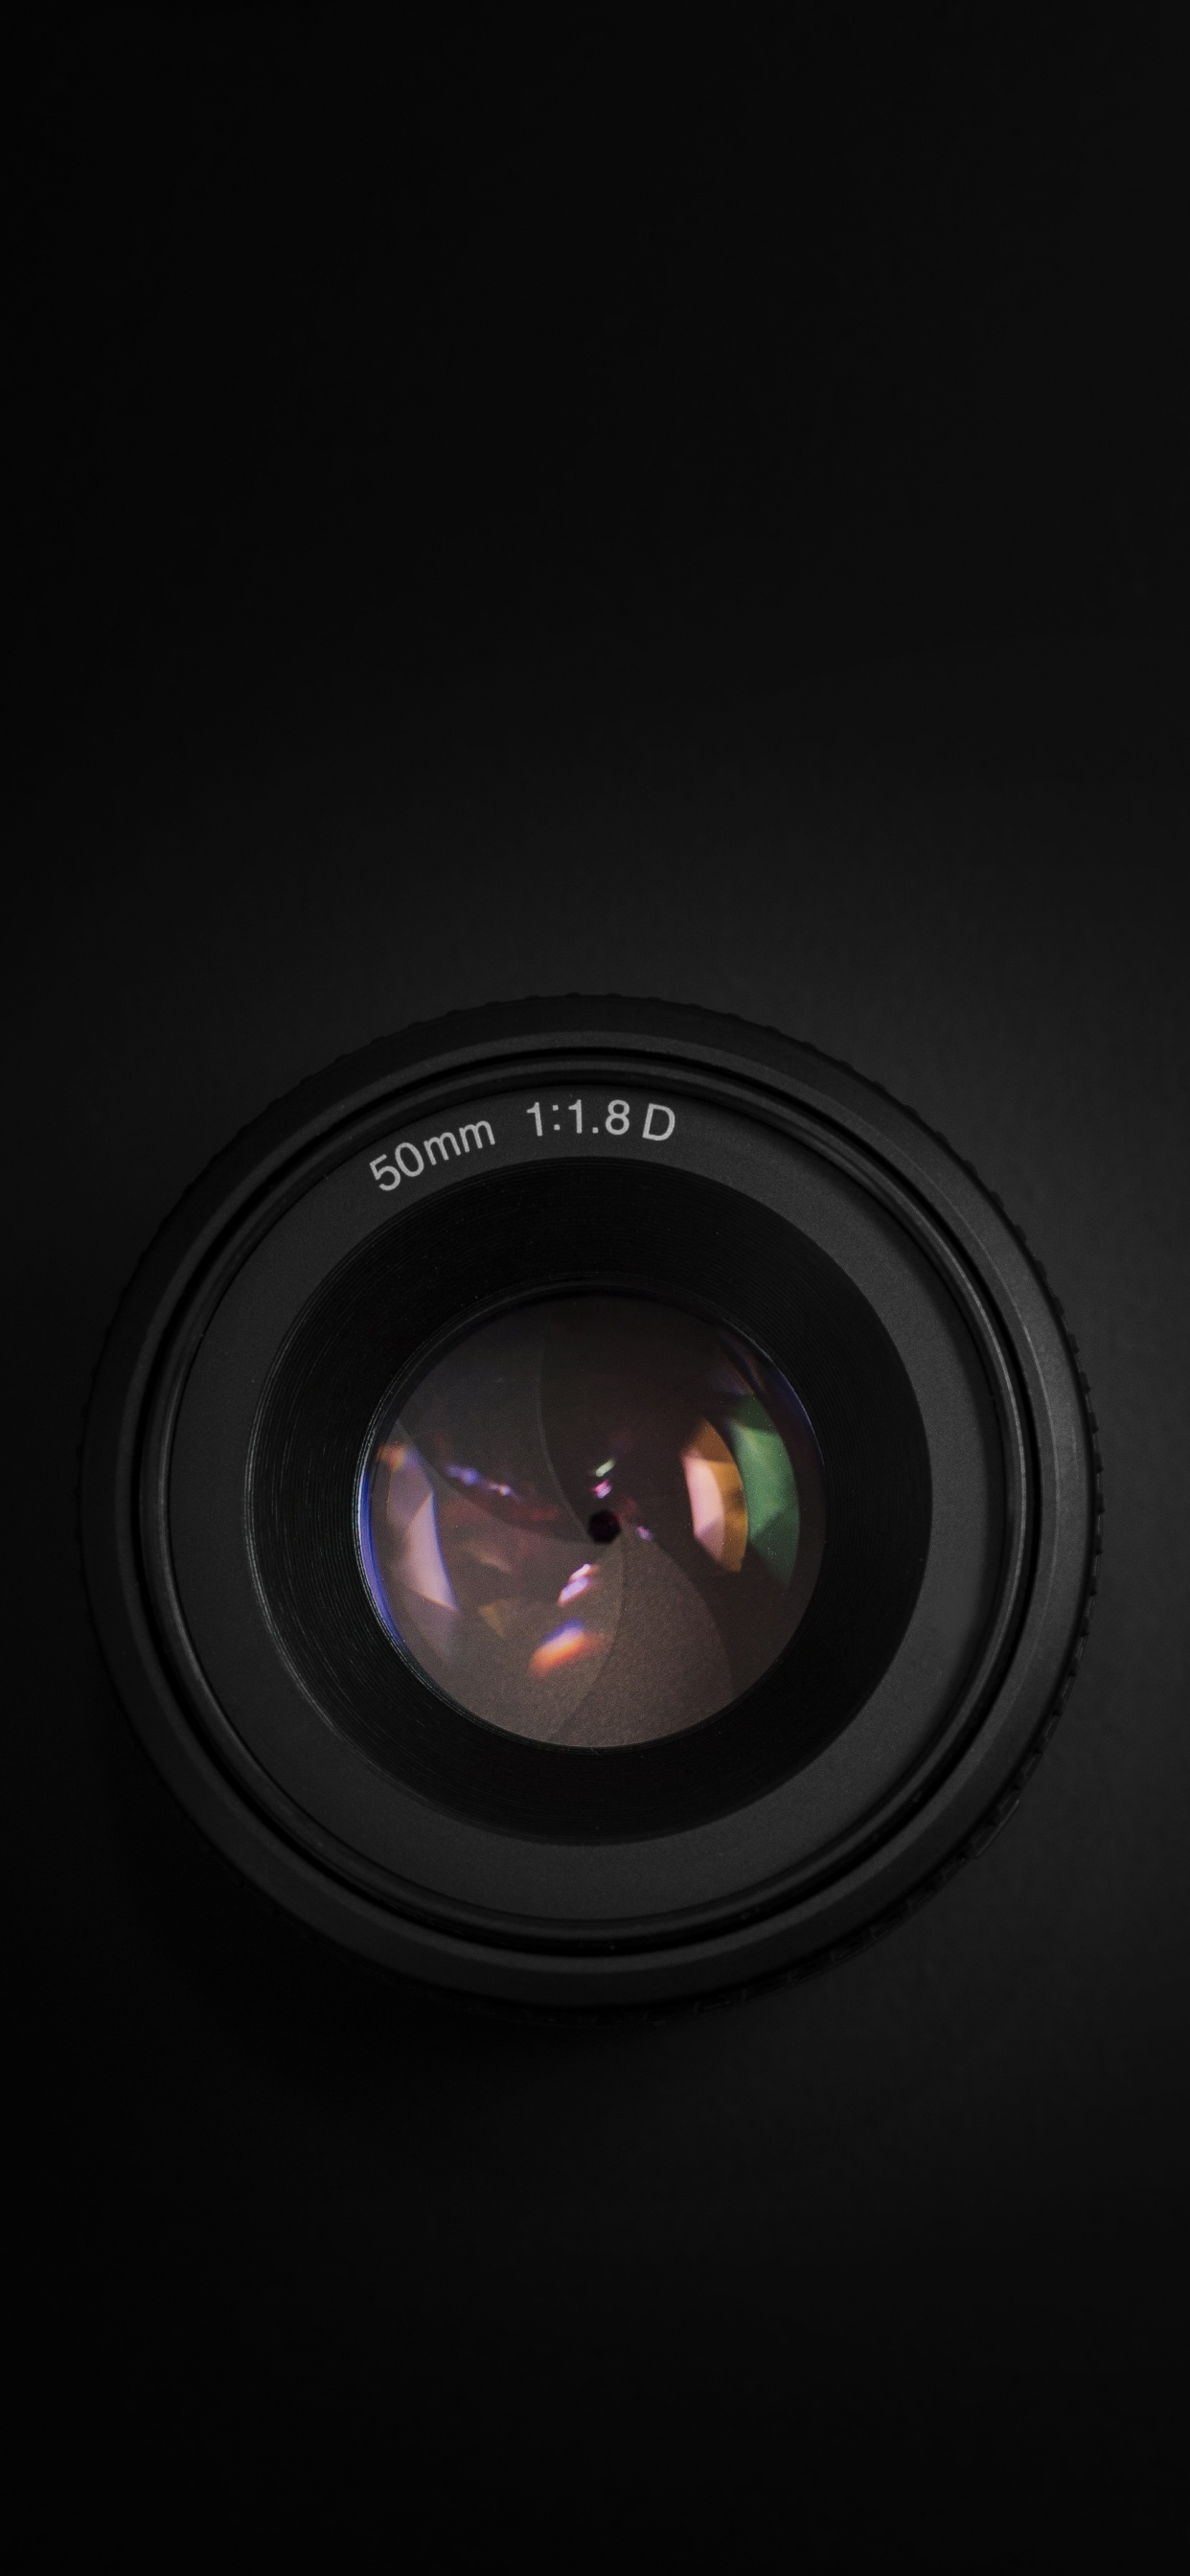 Black Camera Lens on Black Surface. Wallpaper in 1242x2688 Resolution